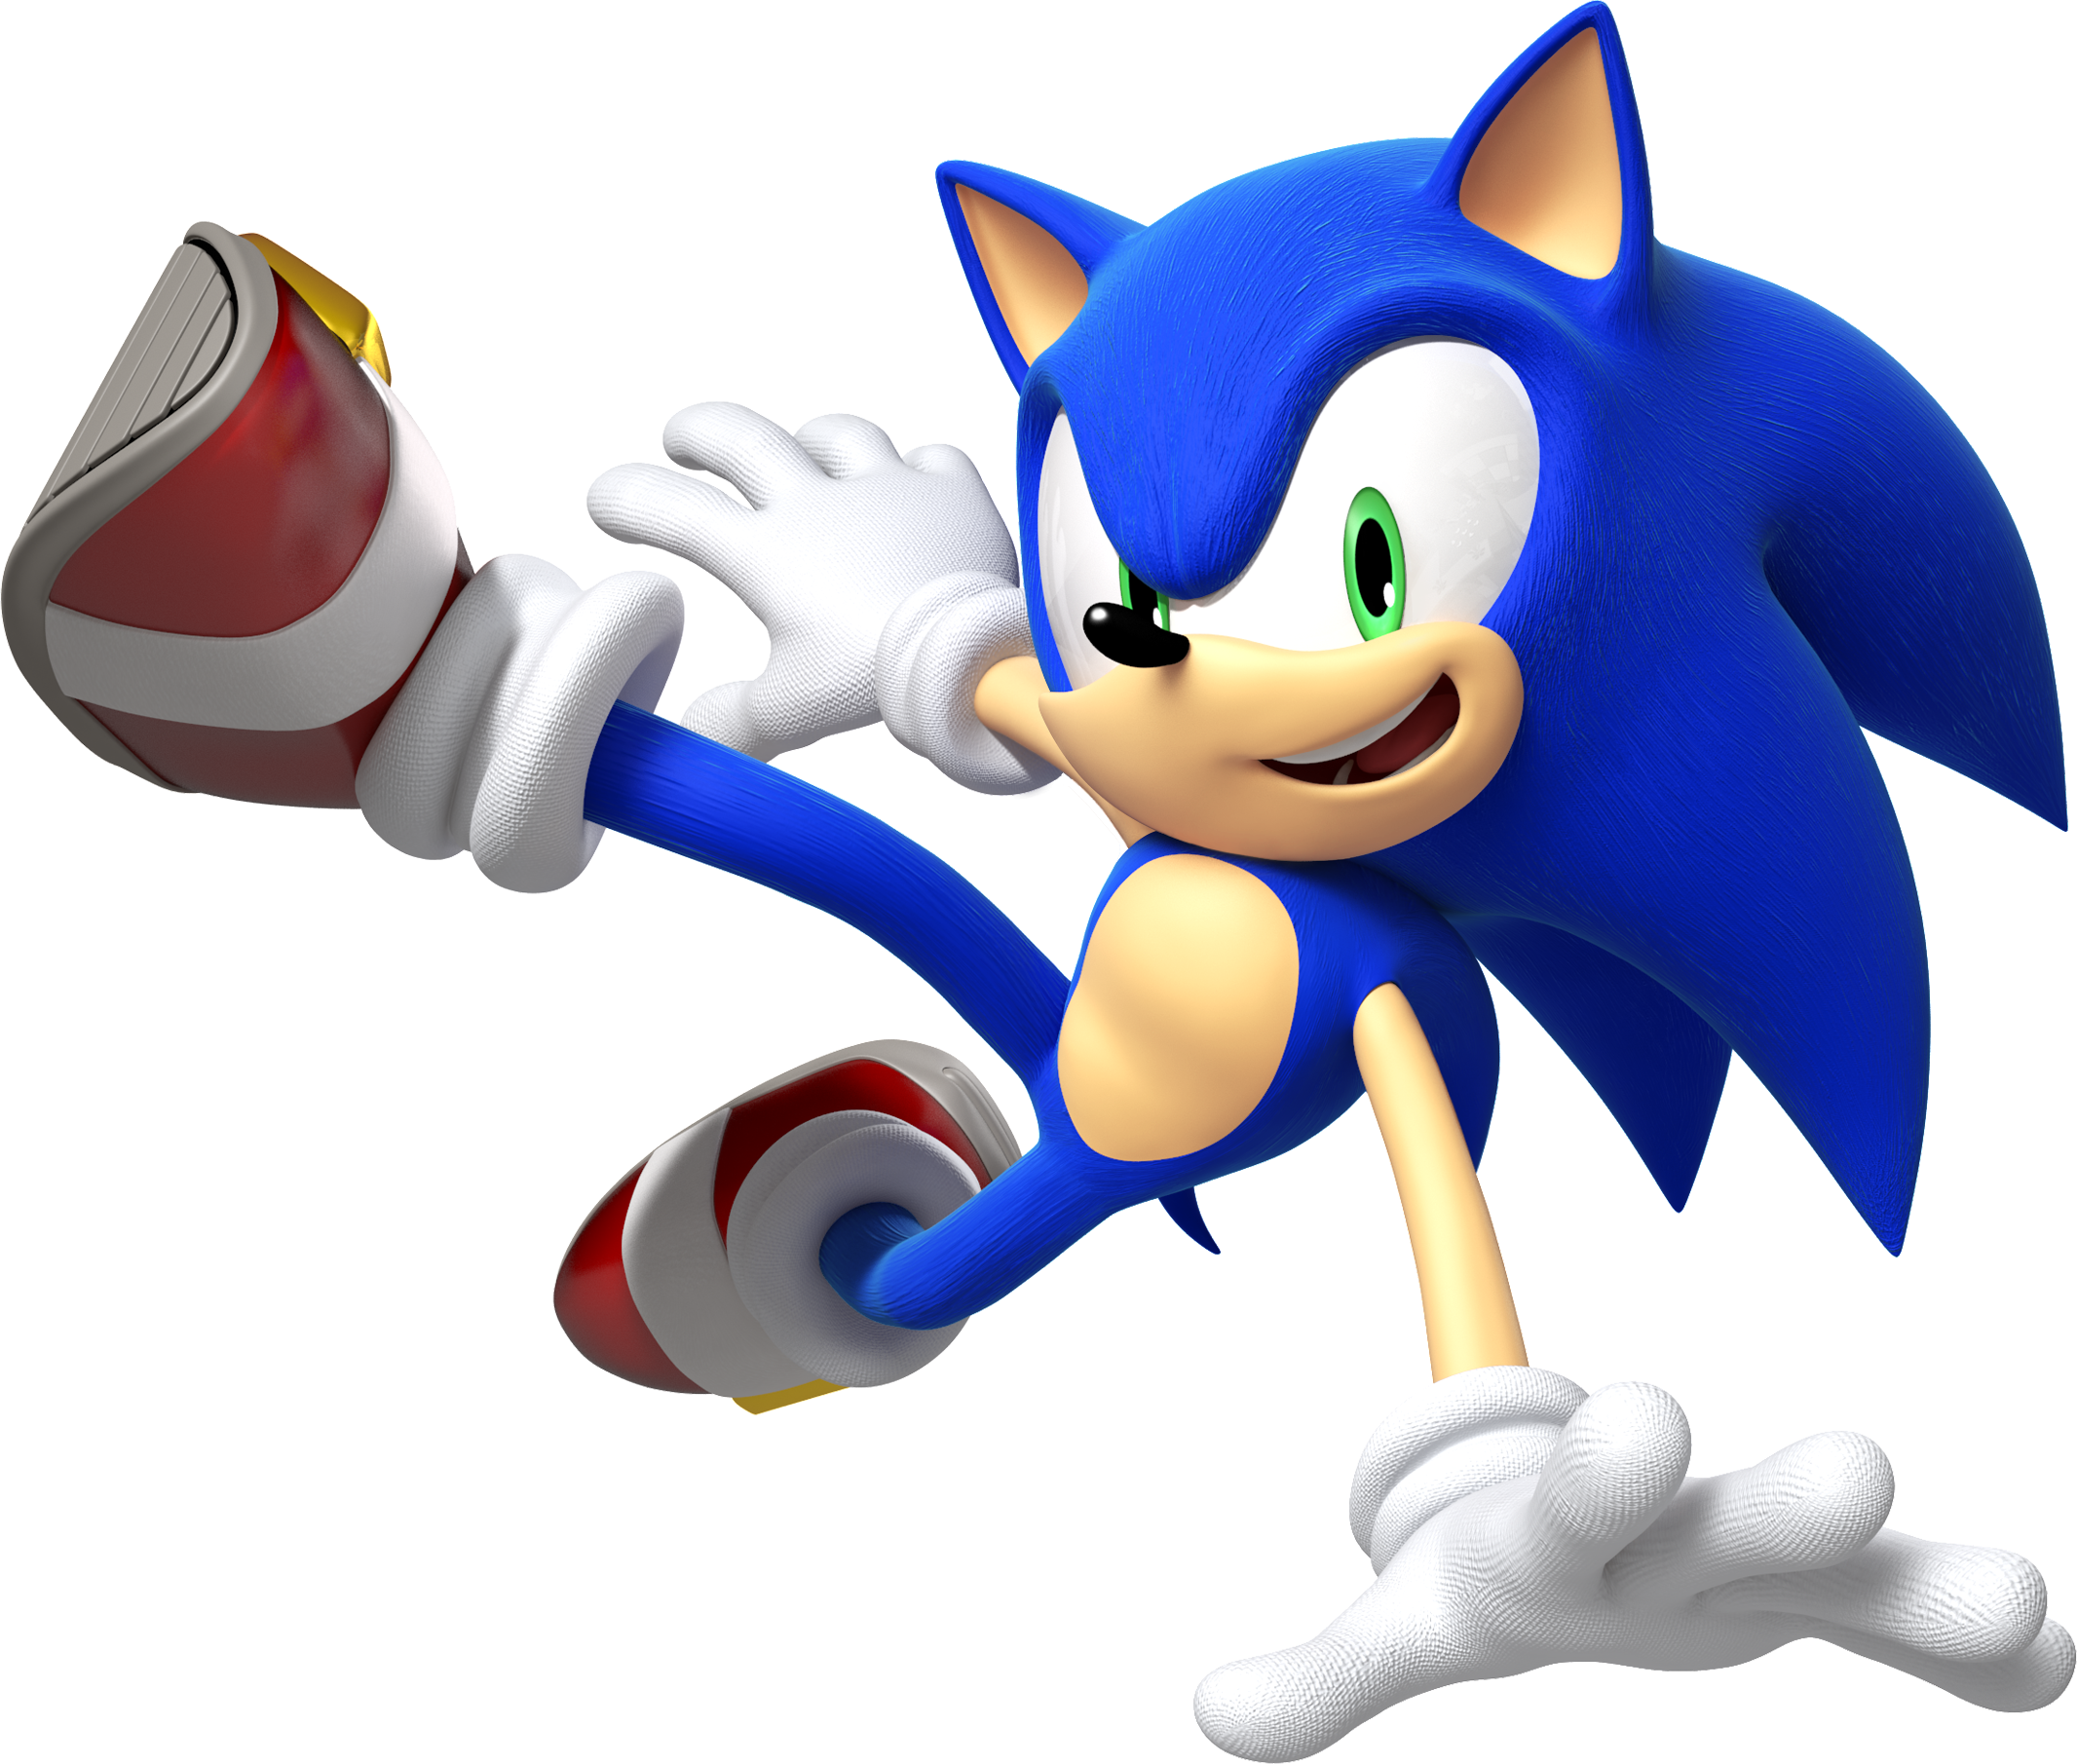 Sonic The Hedgehog Movie added - Sonic The Hedgehog Movie